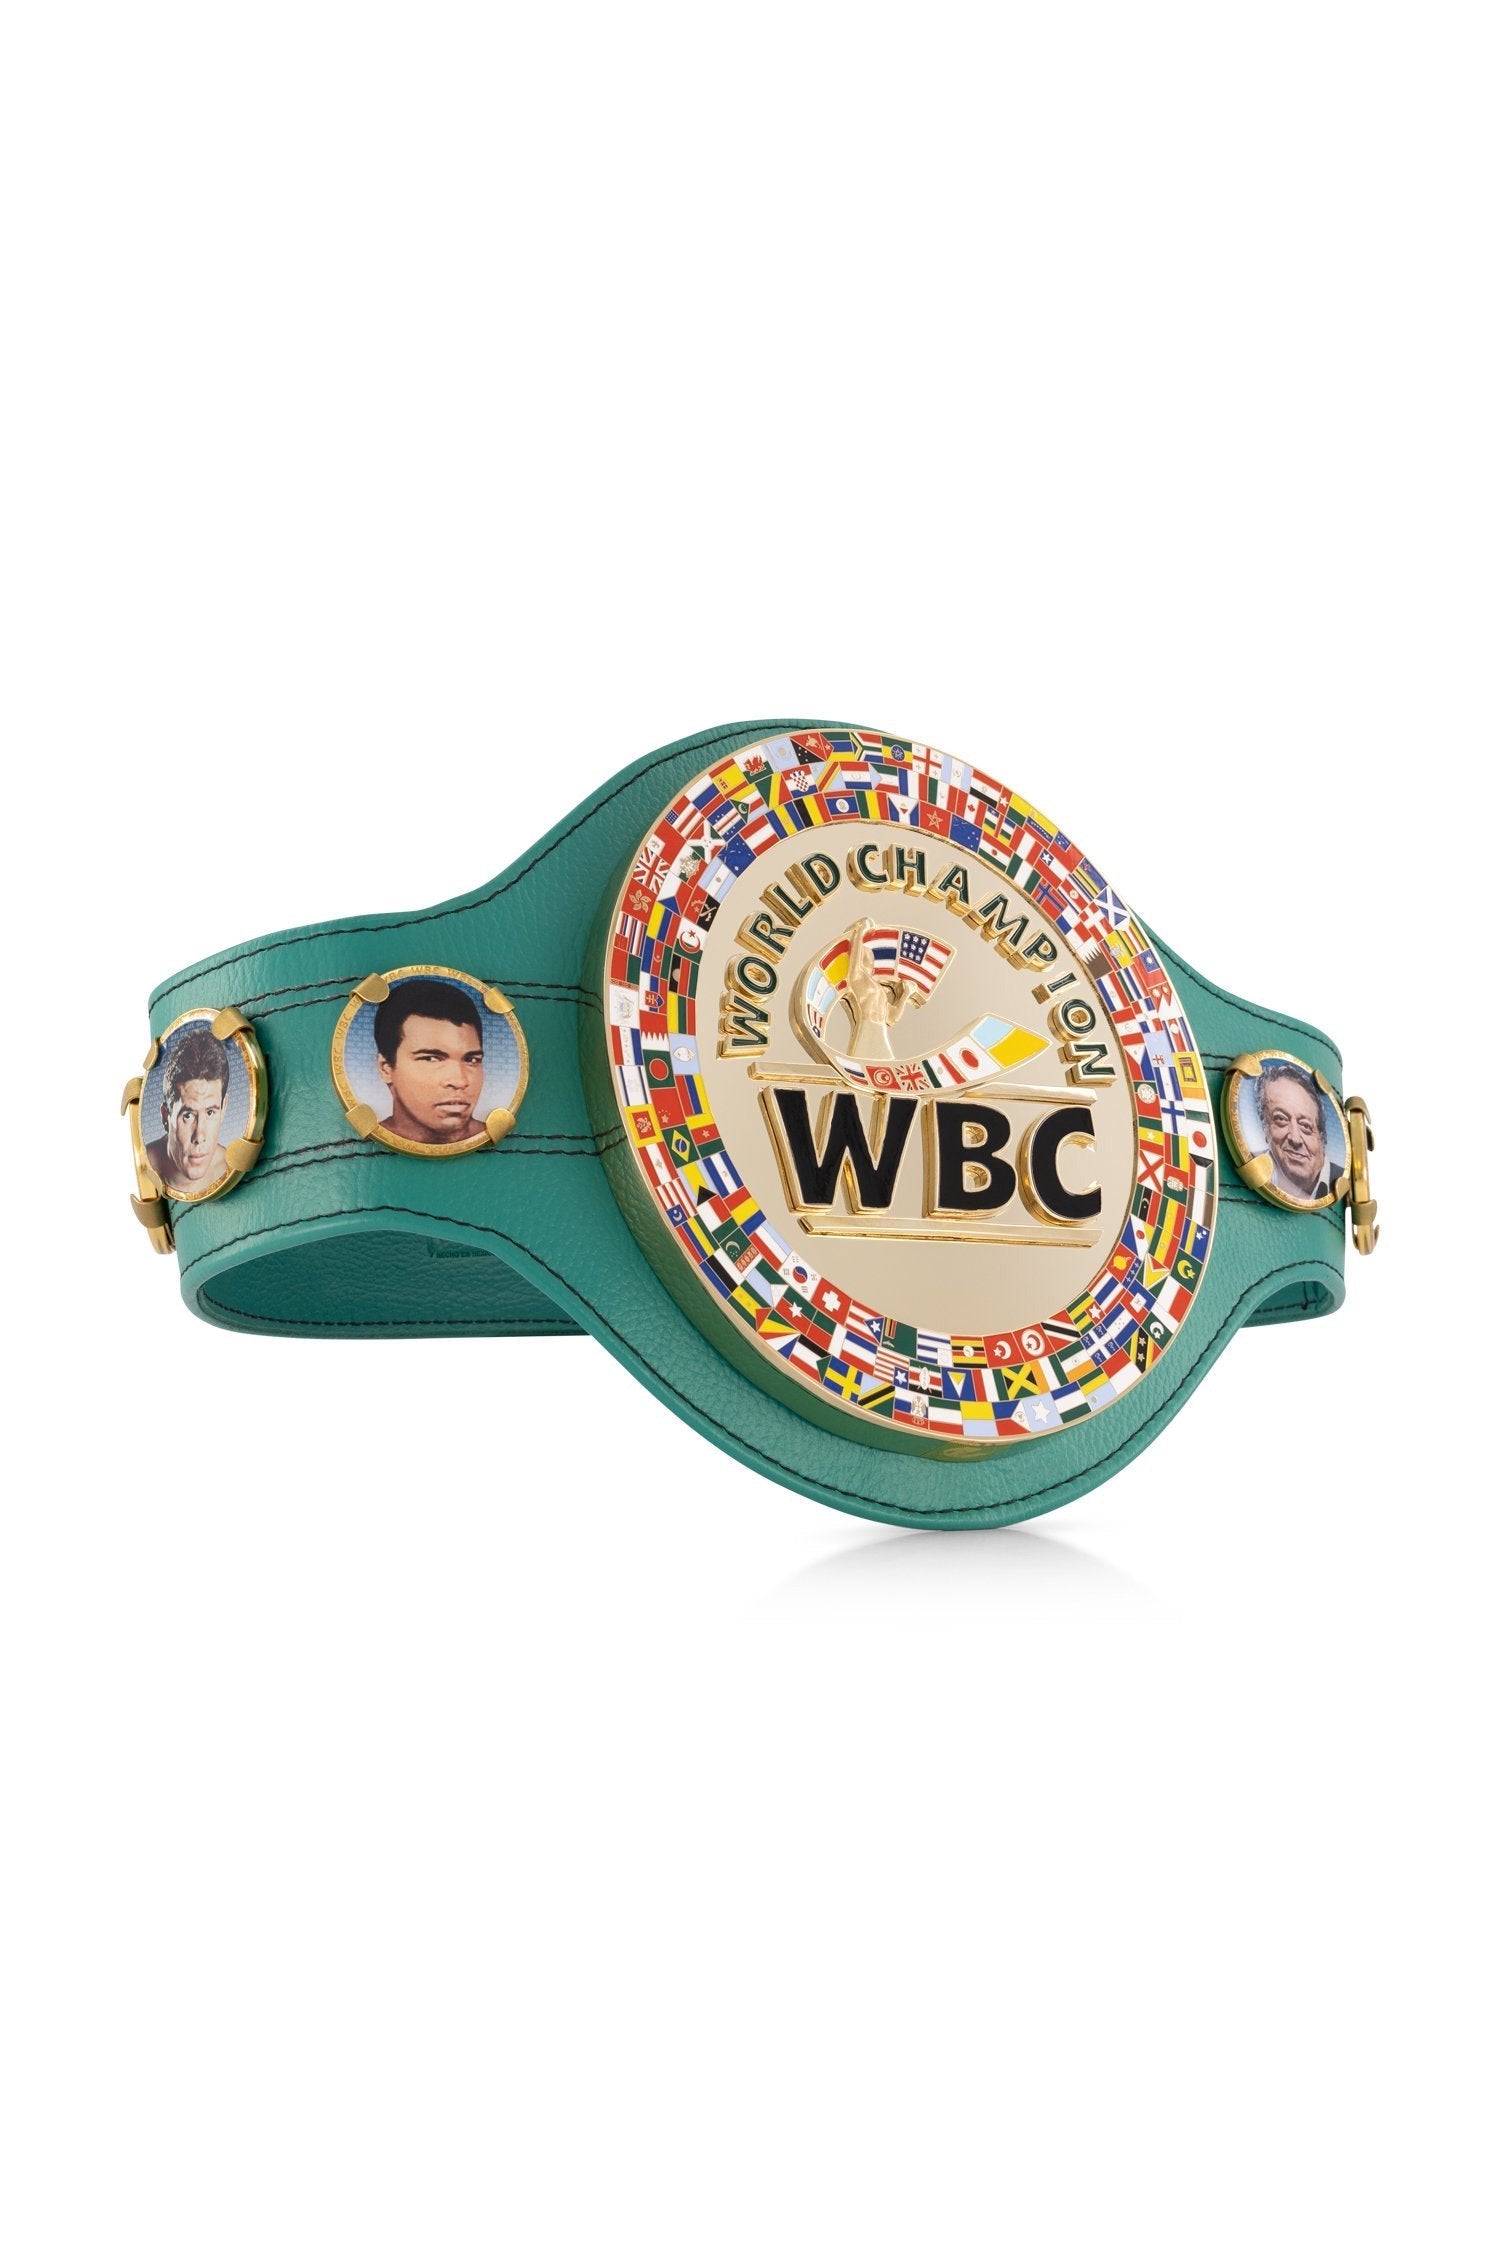 WBC Store Replica Belts WBC Championship Belt  "Historic Fights" Julio César Chávez vs. Greg Haugen